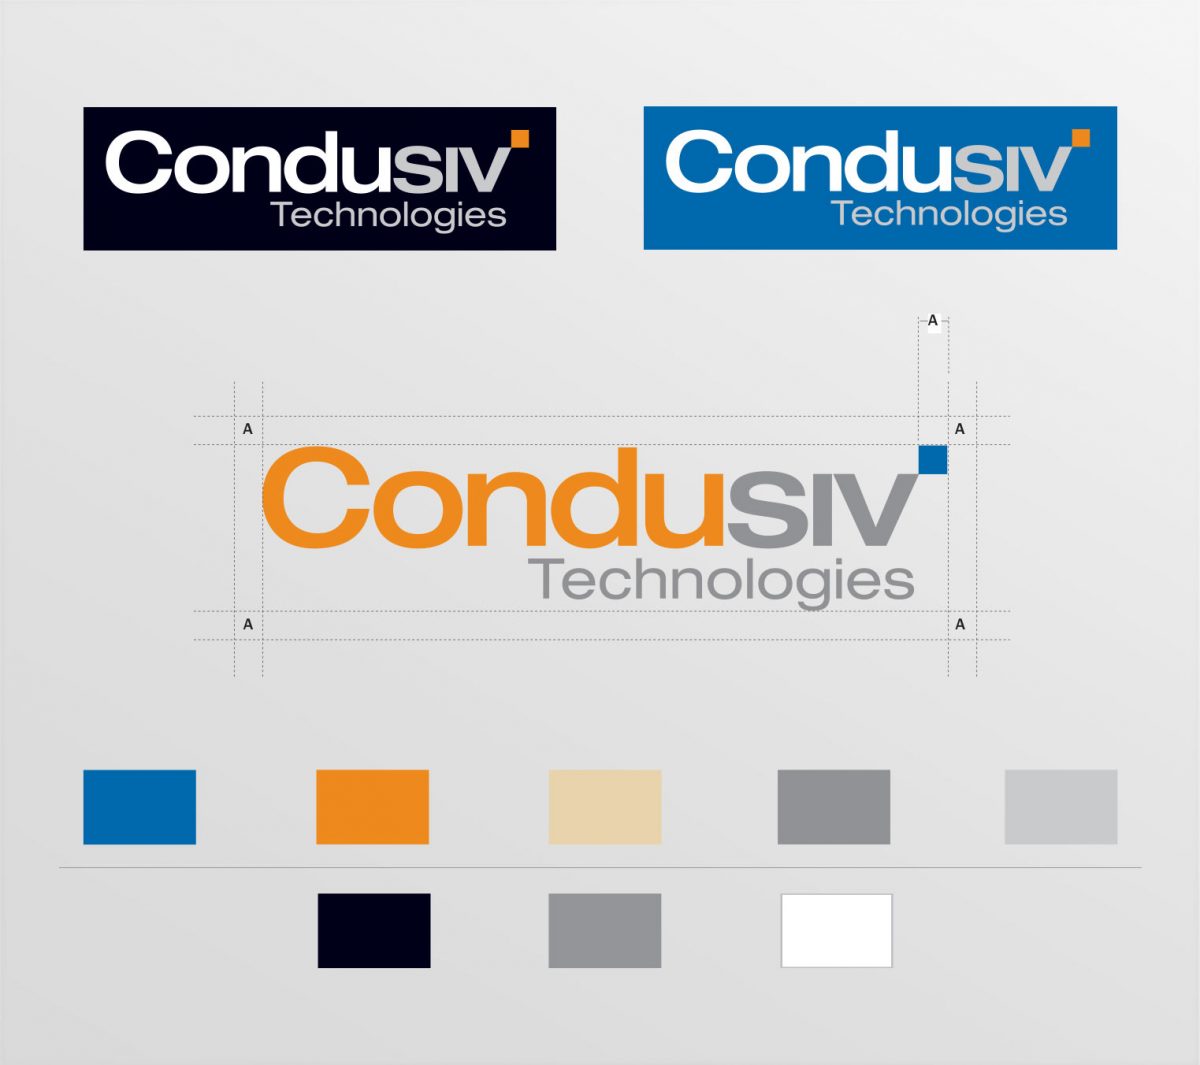 Corporate Identity brand guide developed for Condusiv Technologies